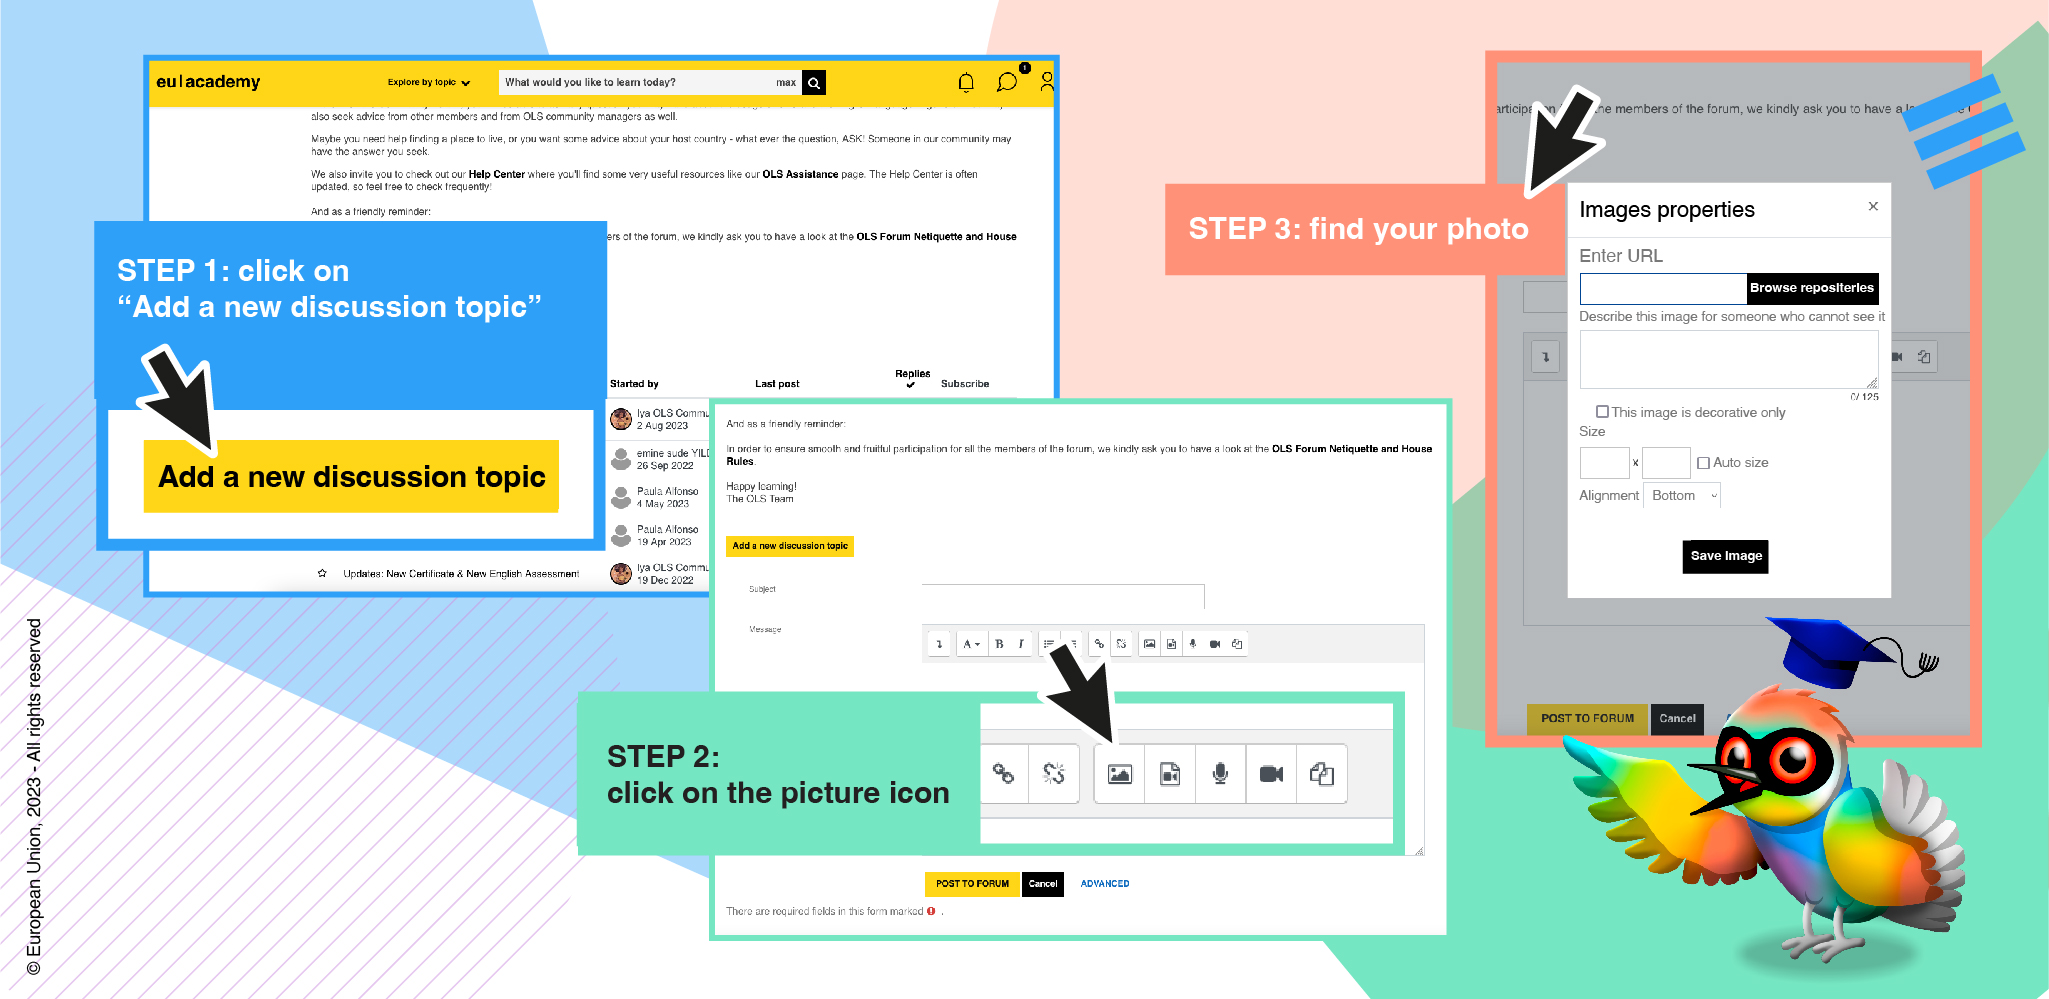 Screenshots of the OLS platform illustrating how to upload photos